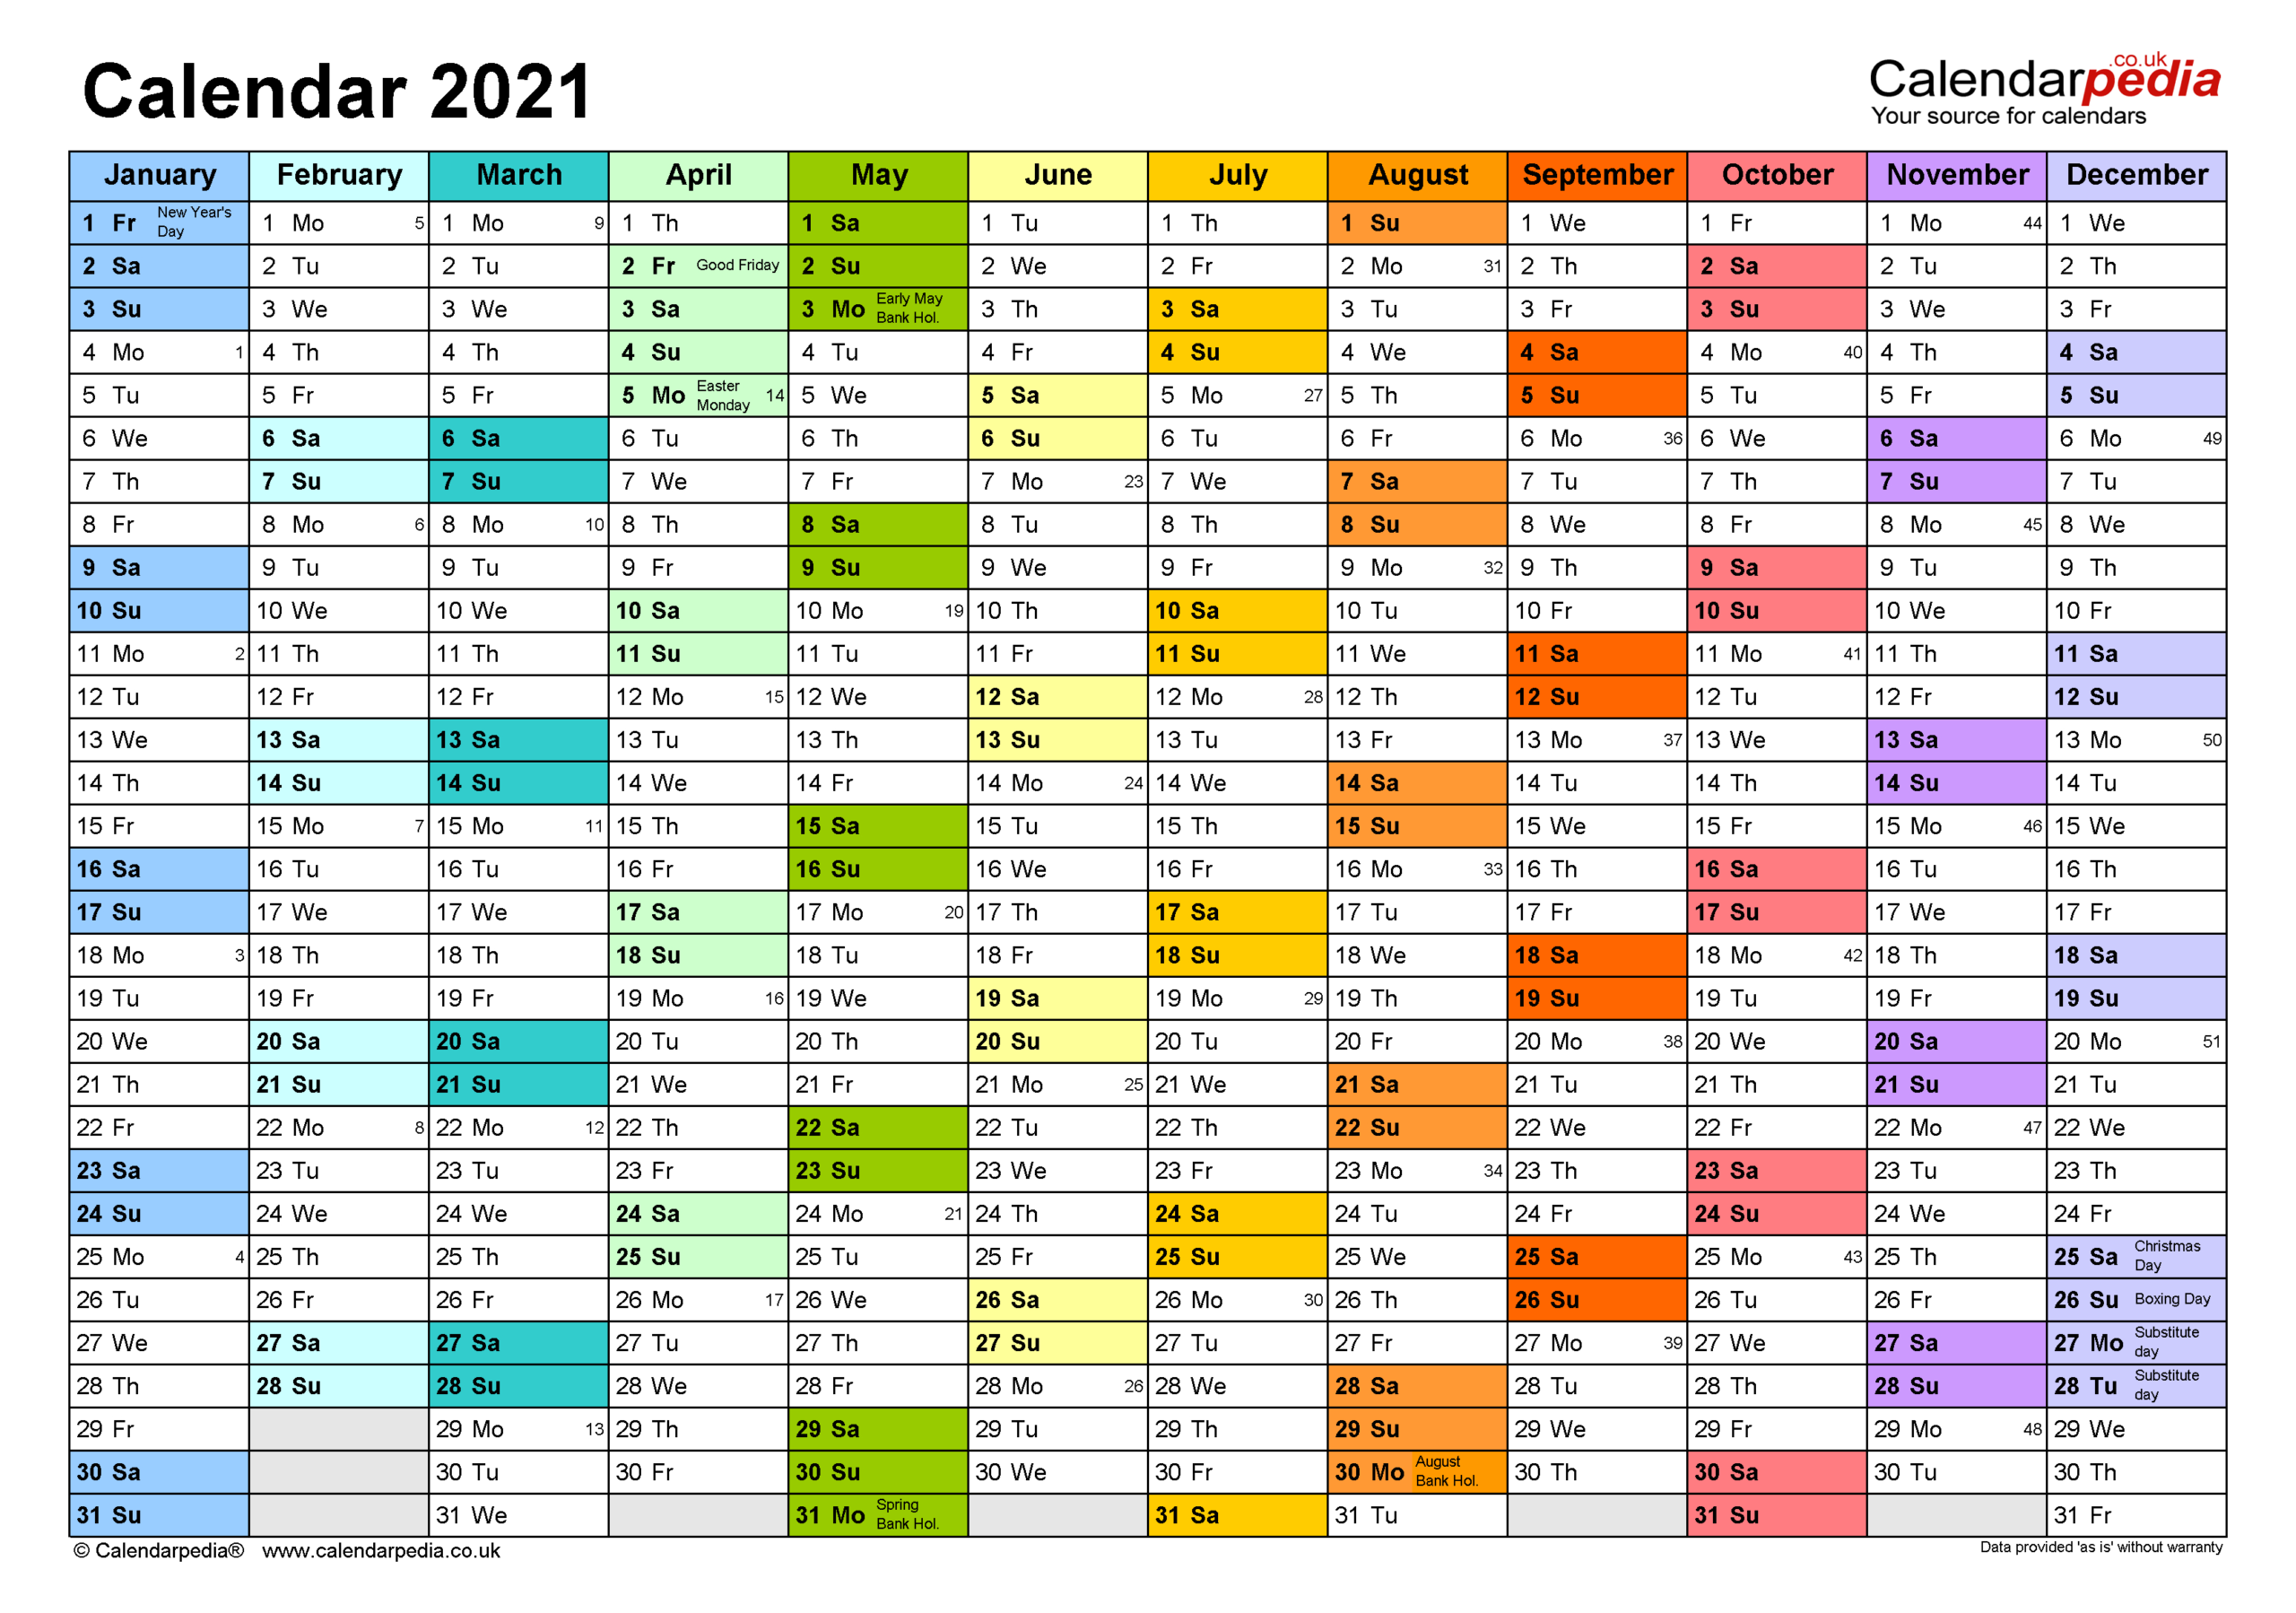 Calendar 2021 (Uk) - Free Printable Microsoft Word Templates